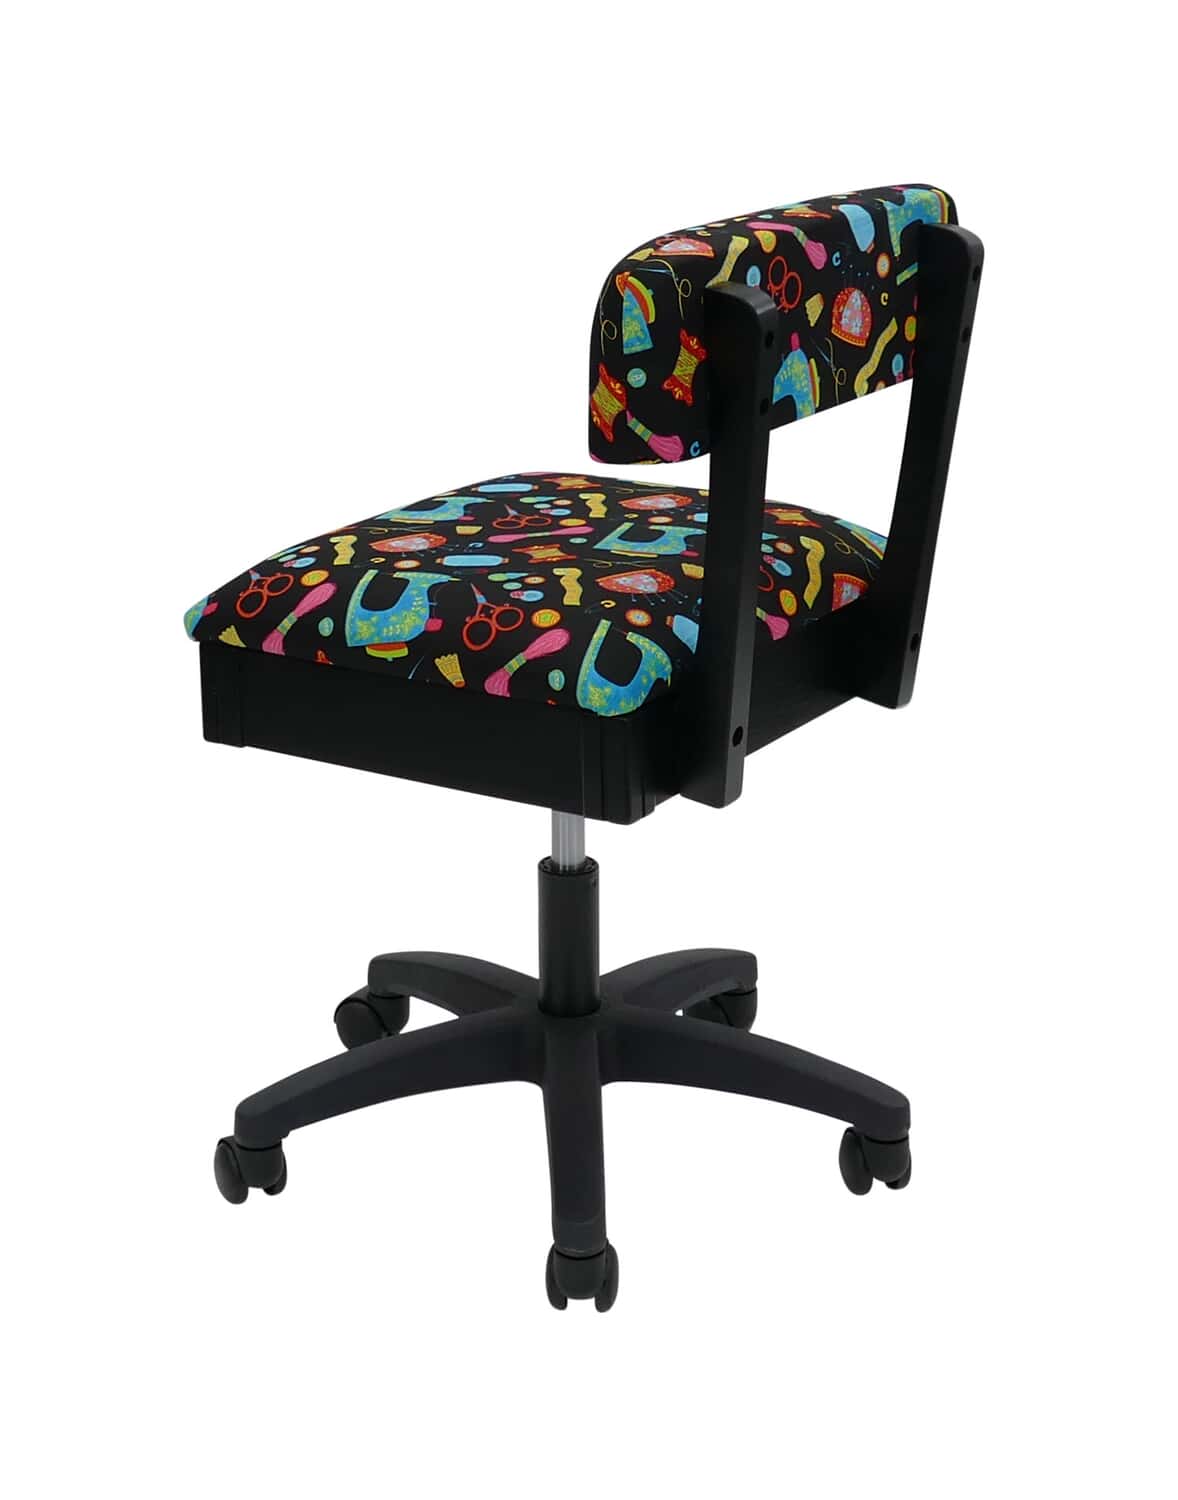 Arrow H7013B Hydraulic Chair in Riley Blake Black Upholstery